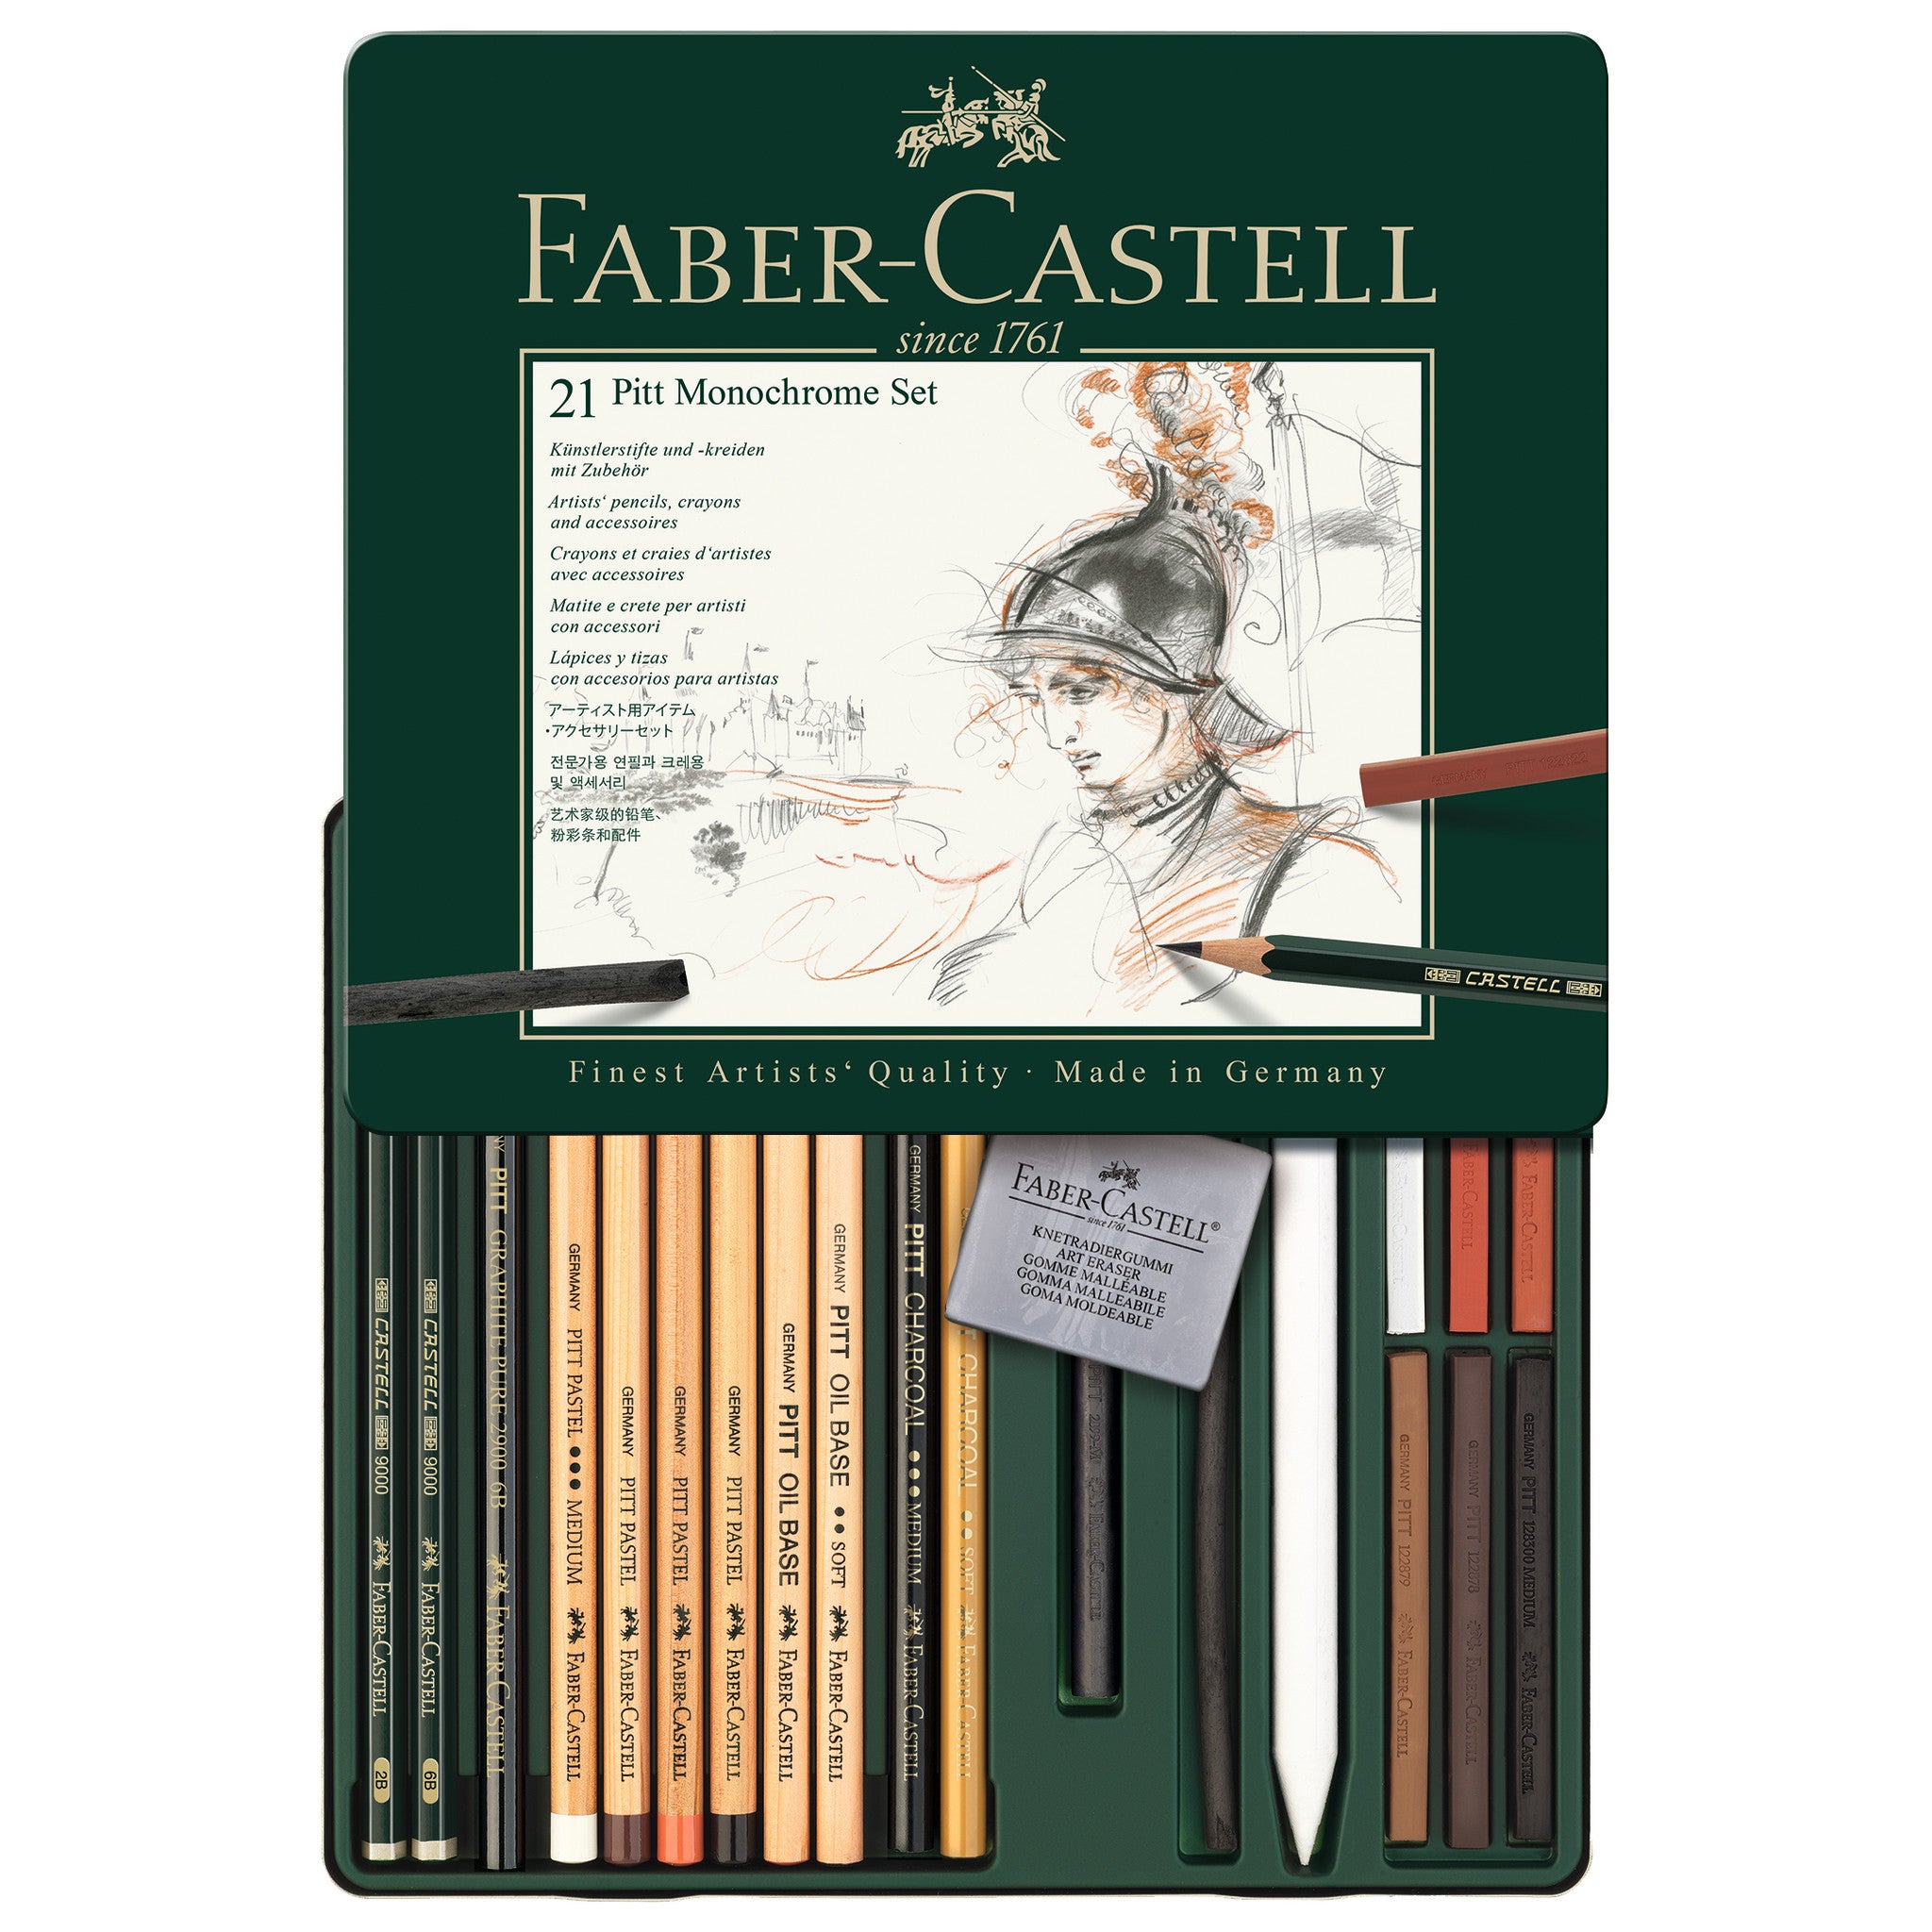 Pitt Monochrome Set of 12 pencils charcoal eraser pastel - Anderson Ranch  ArtWorks Store